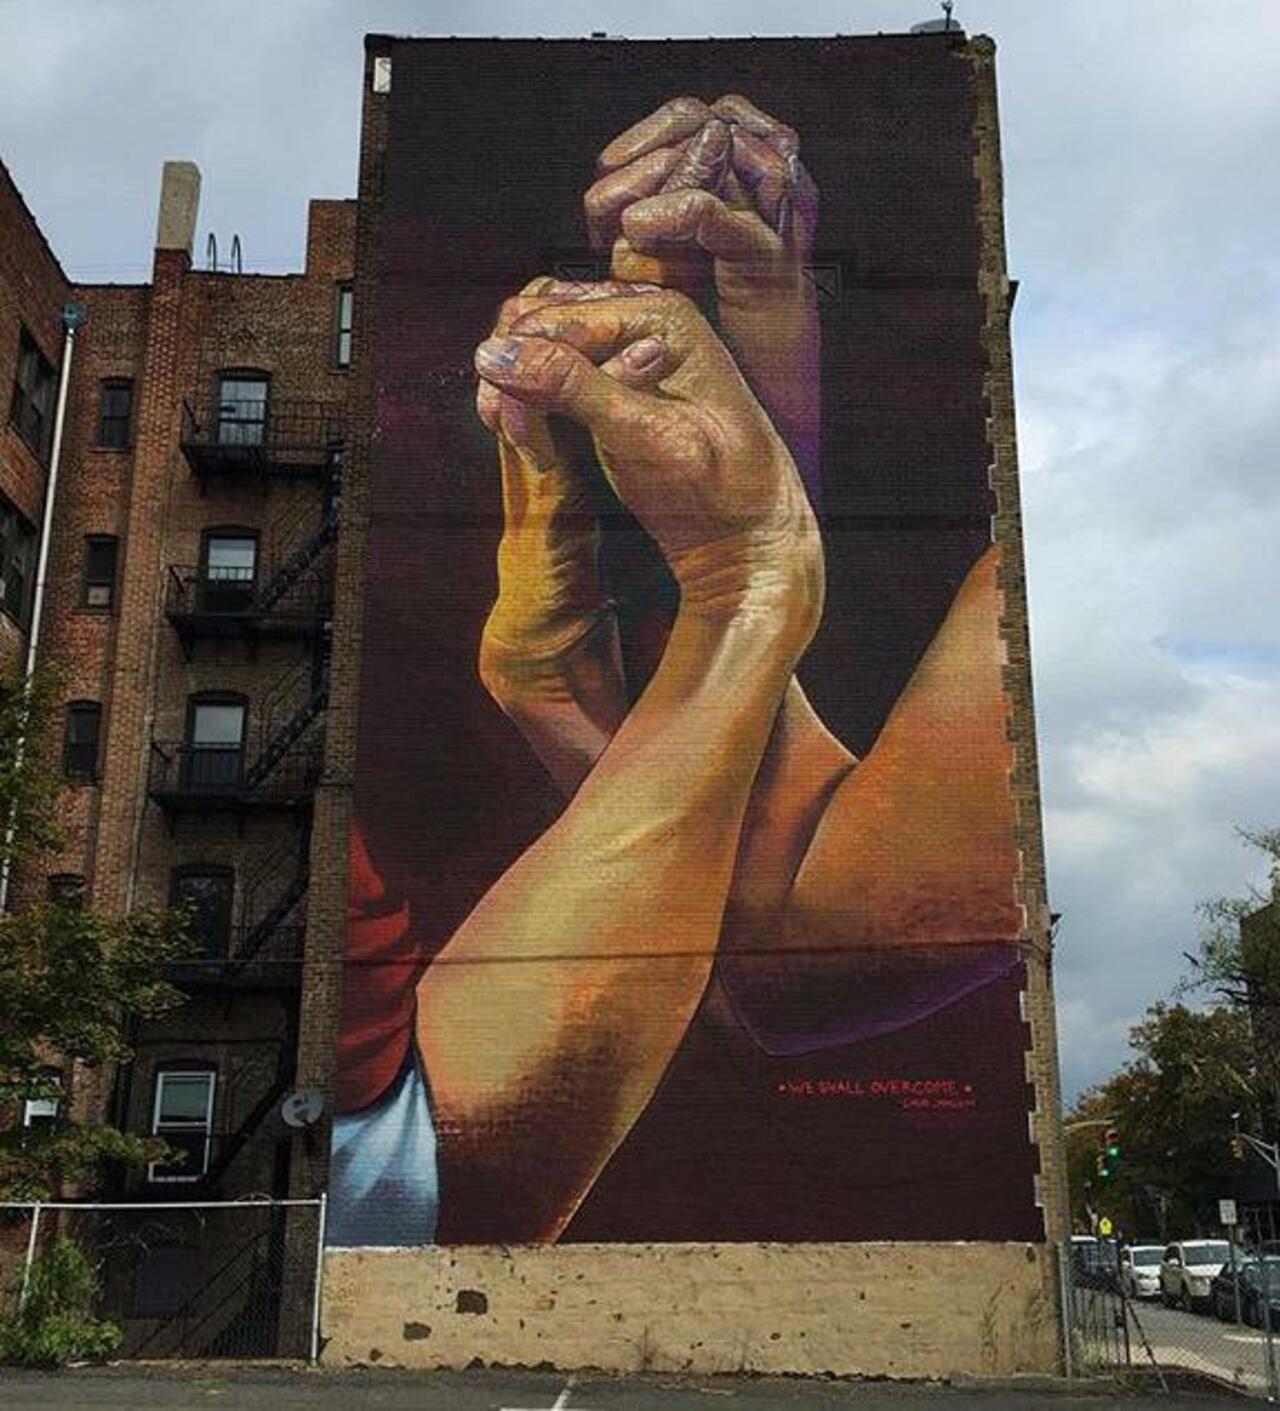 New Street Art by CaseMaclaim in Jersey City for the TheBKcollective 

#art #graffiti #mural #streetart http://t.co/kkOYejGsMU